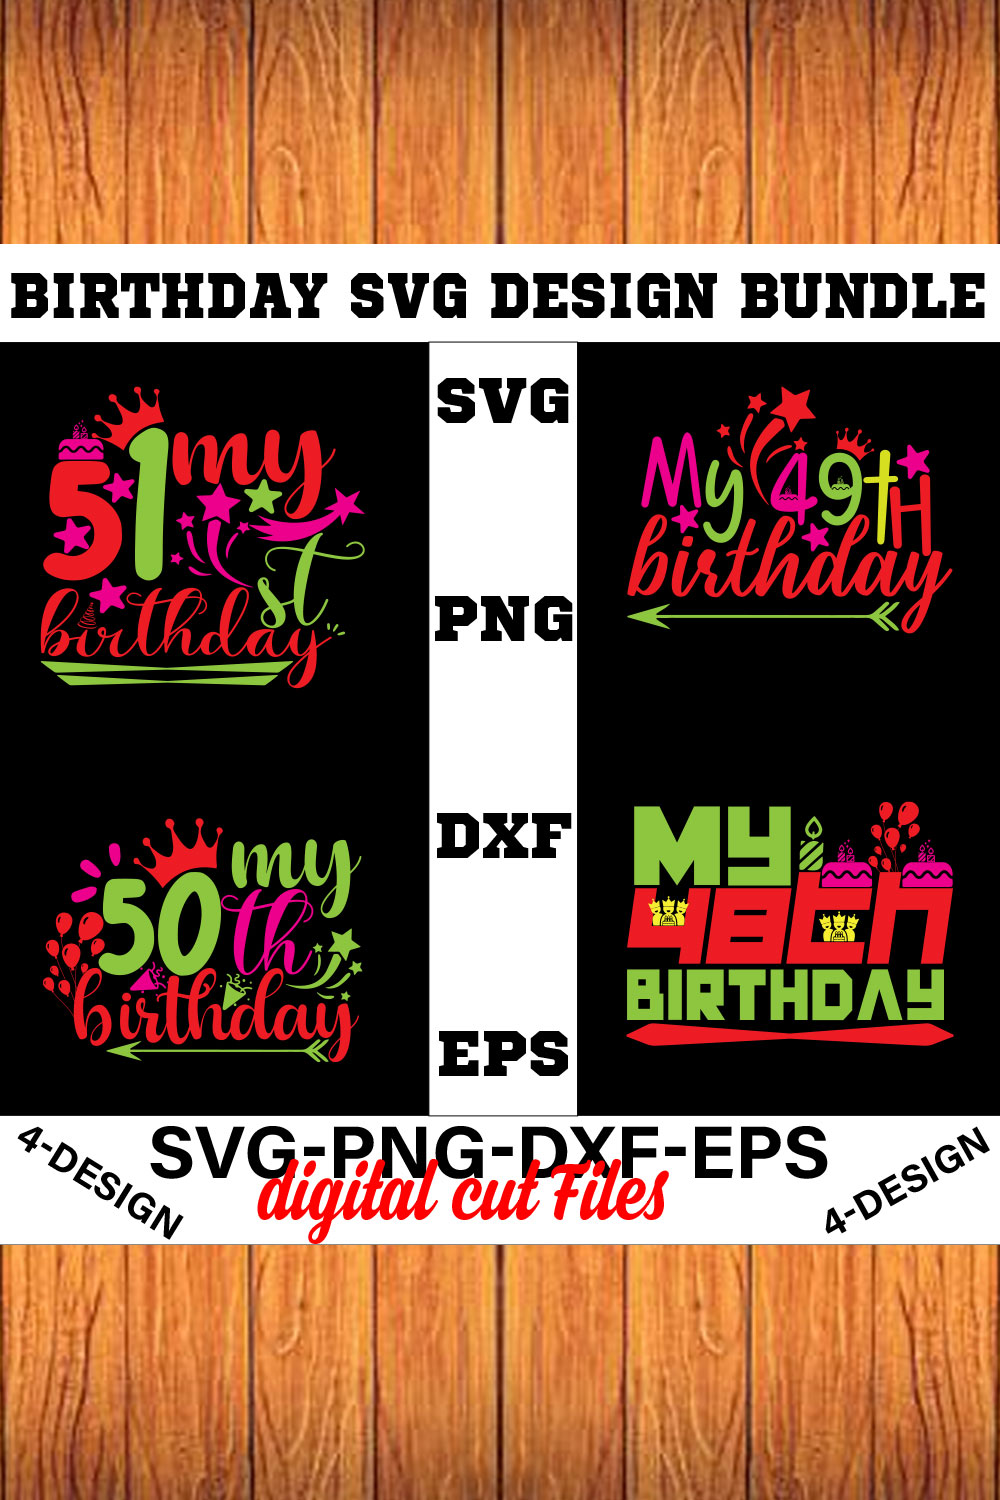 birthday svg design bundle Happy birthday svg bundle hand lettered birthday svg birthday party svg Volume-13 pinterest preview image.